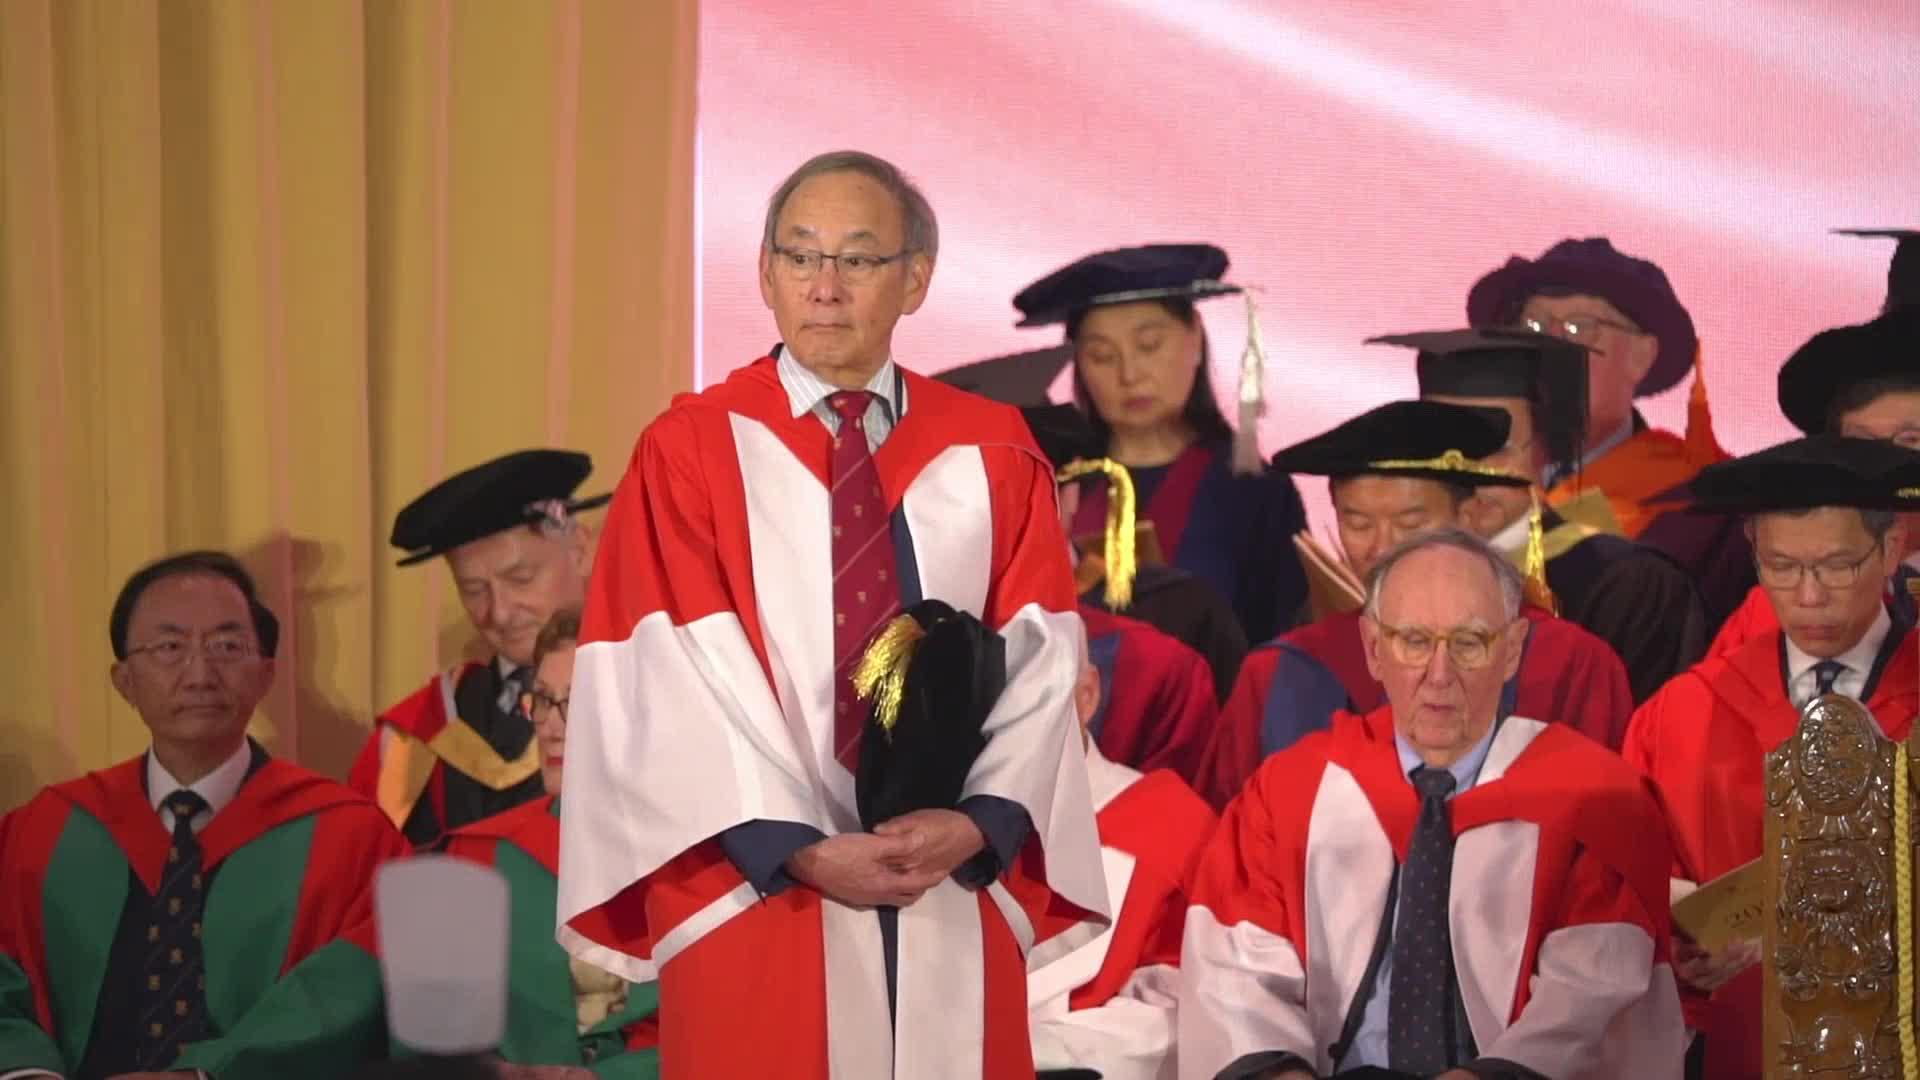 Conferment of Honorary Degree upon Professor Steven CHU